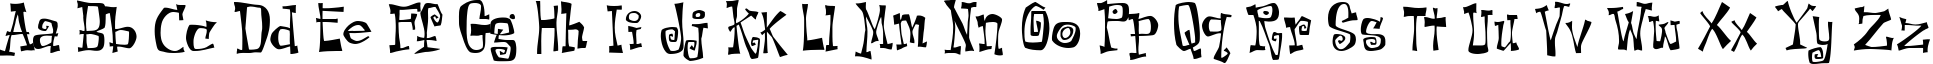 Пример написания английского алфавита шрифтом Kot Leopold